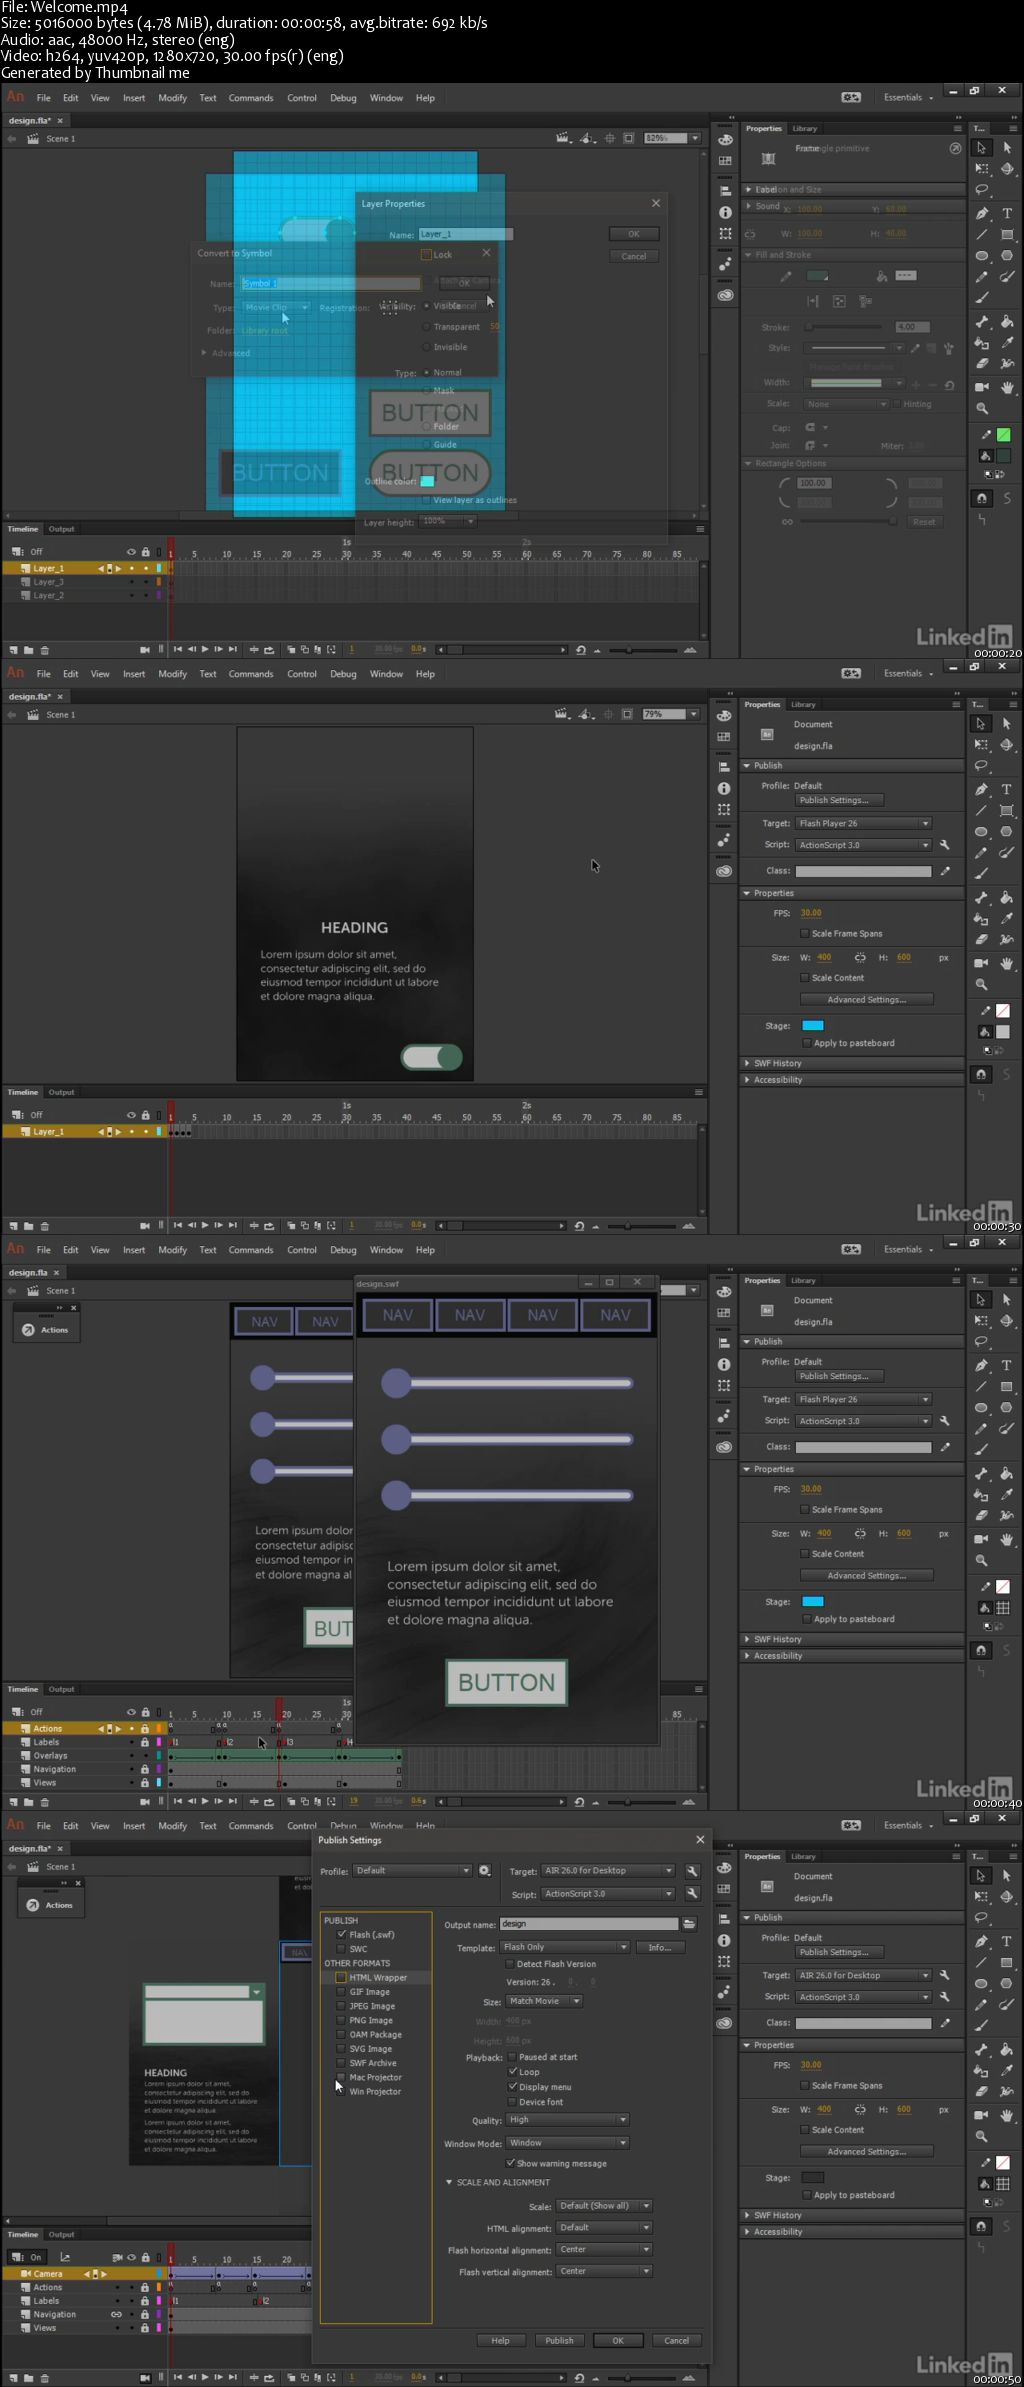 Adobe Animate: Designing Interactive Experiences